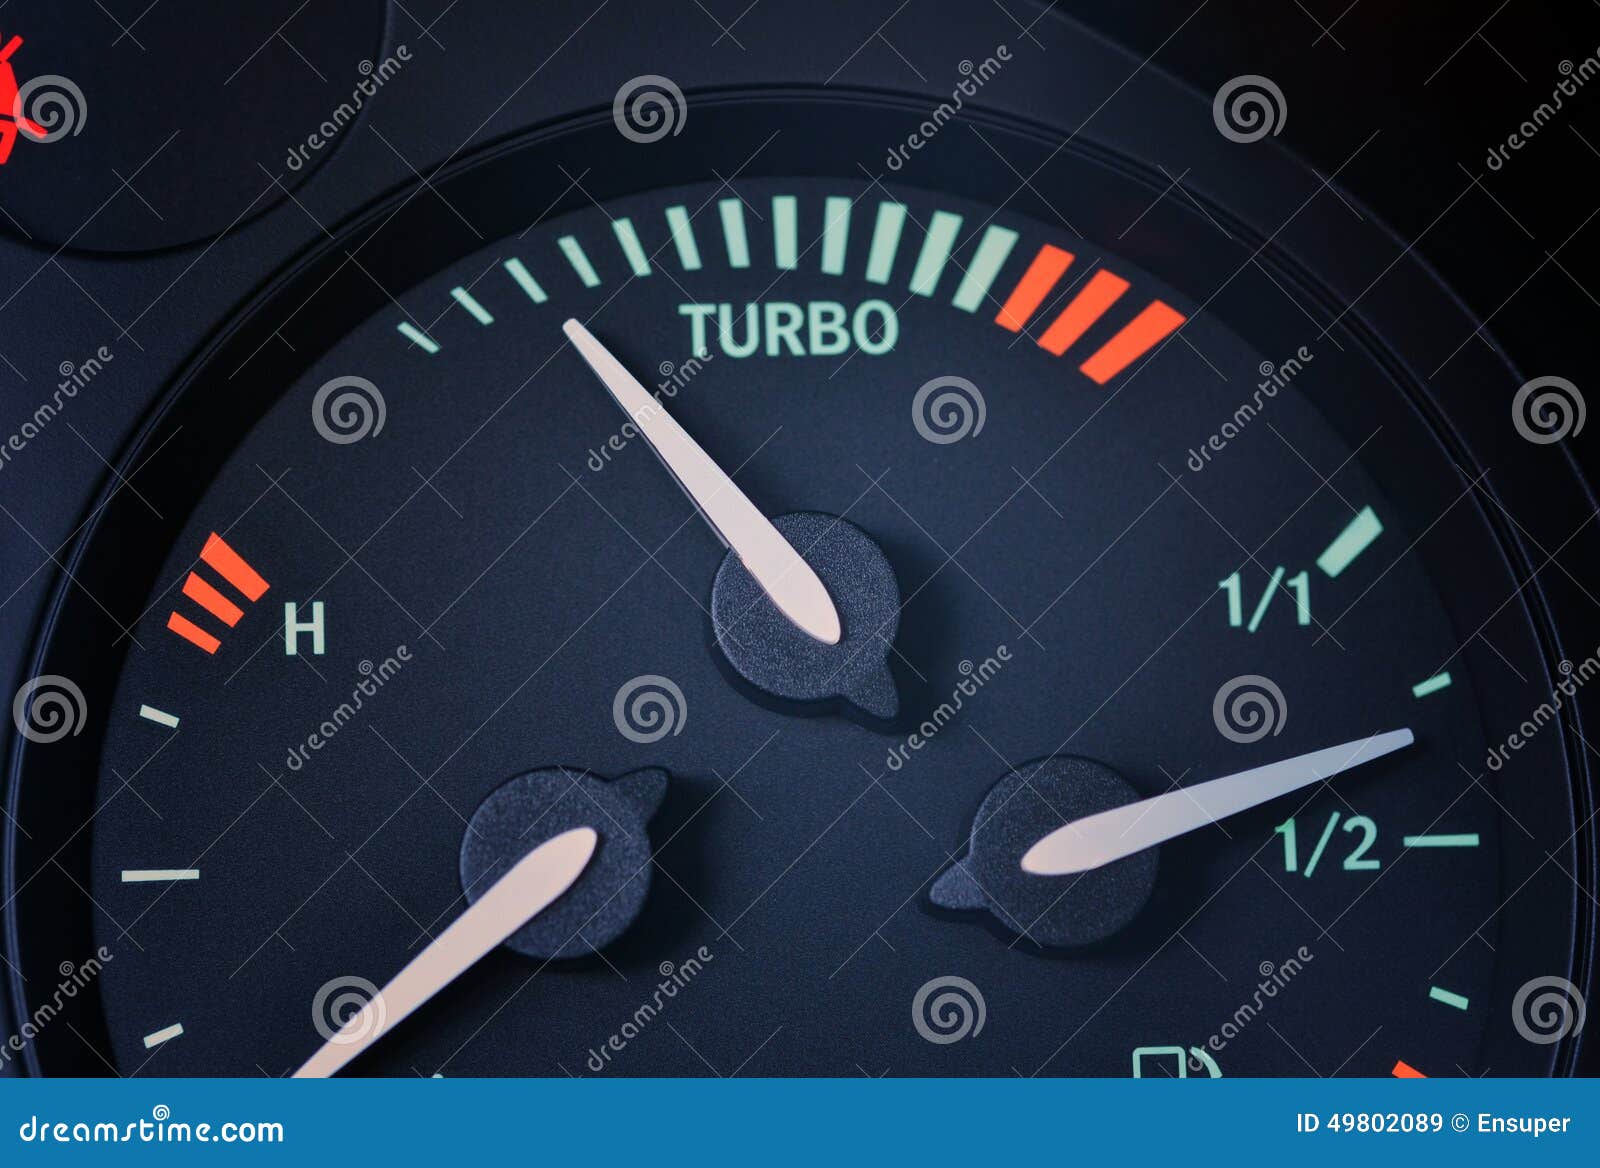 Turbo jrsx indicator